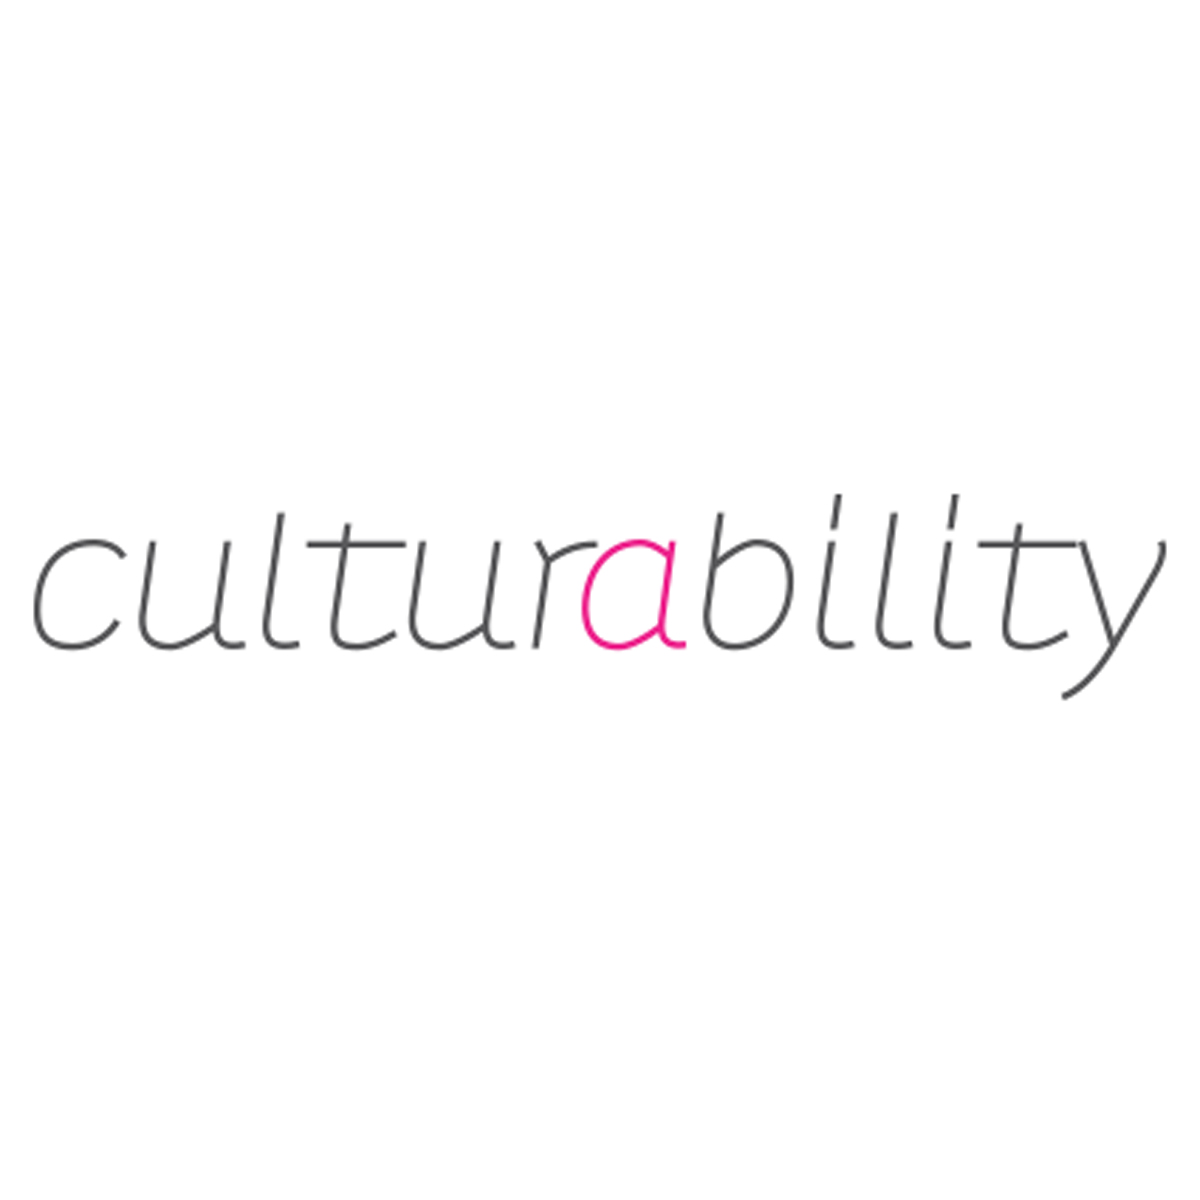 Culturability